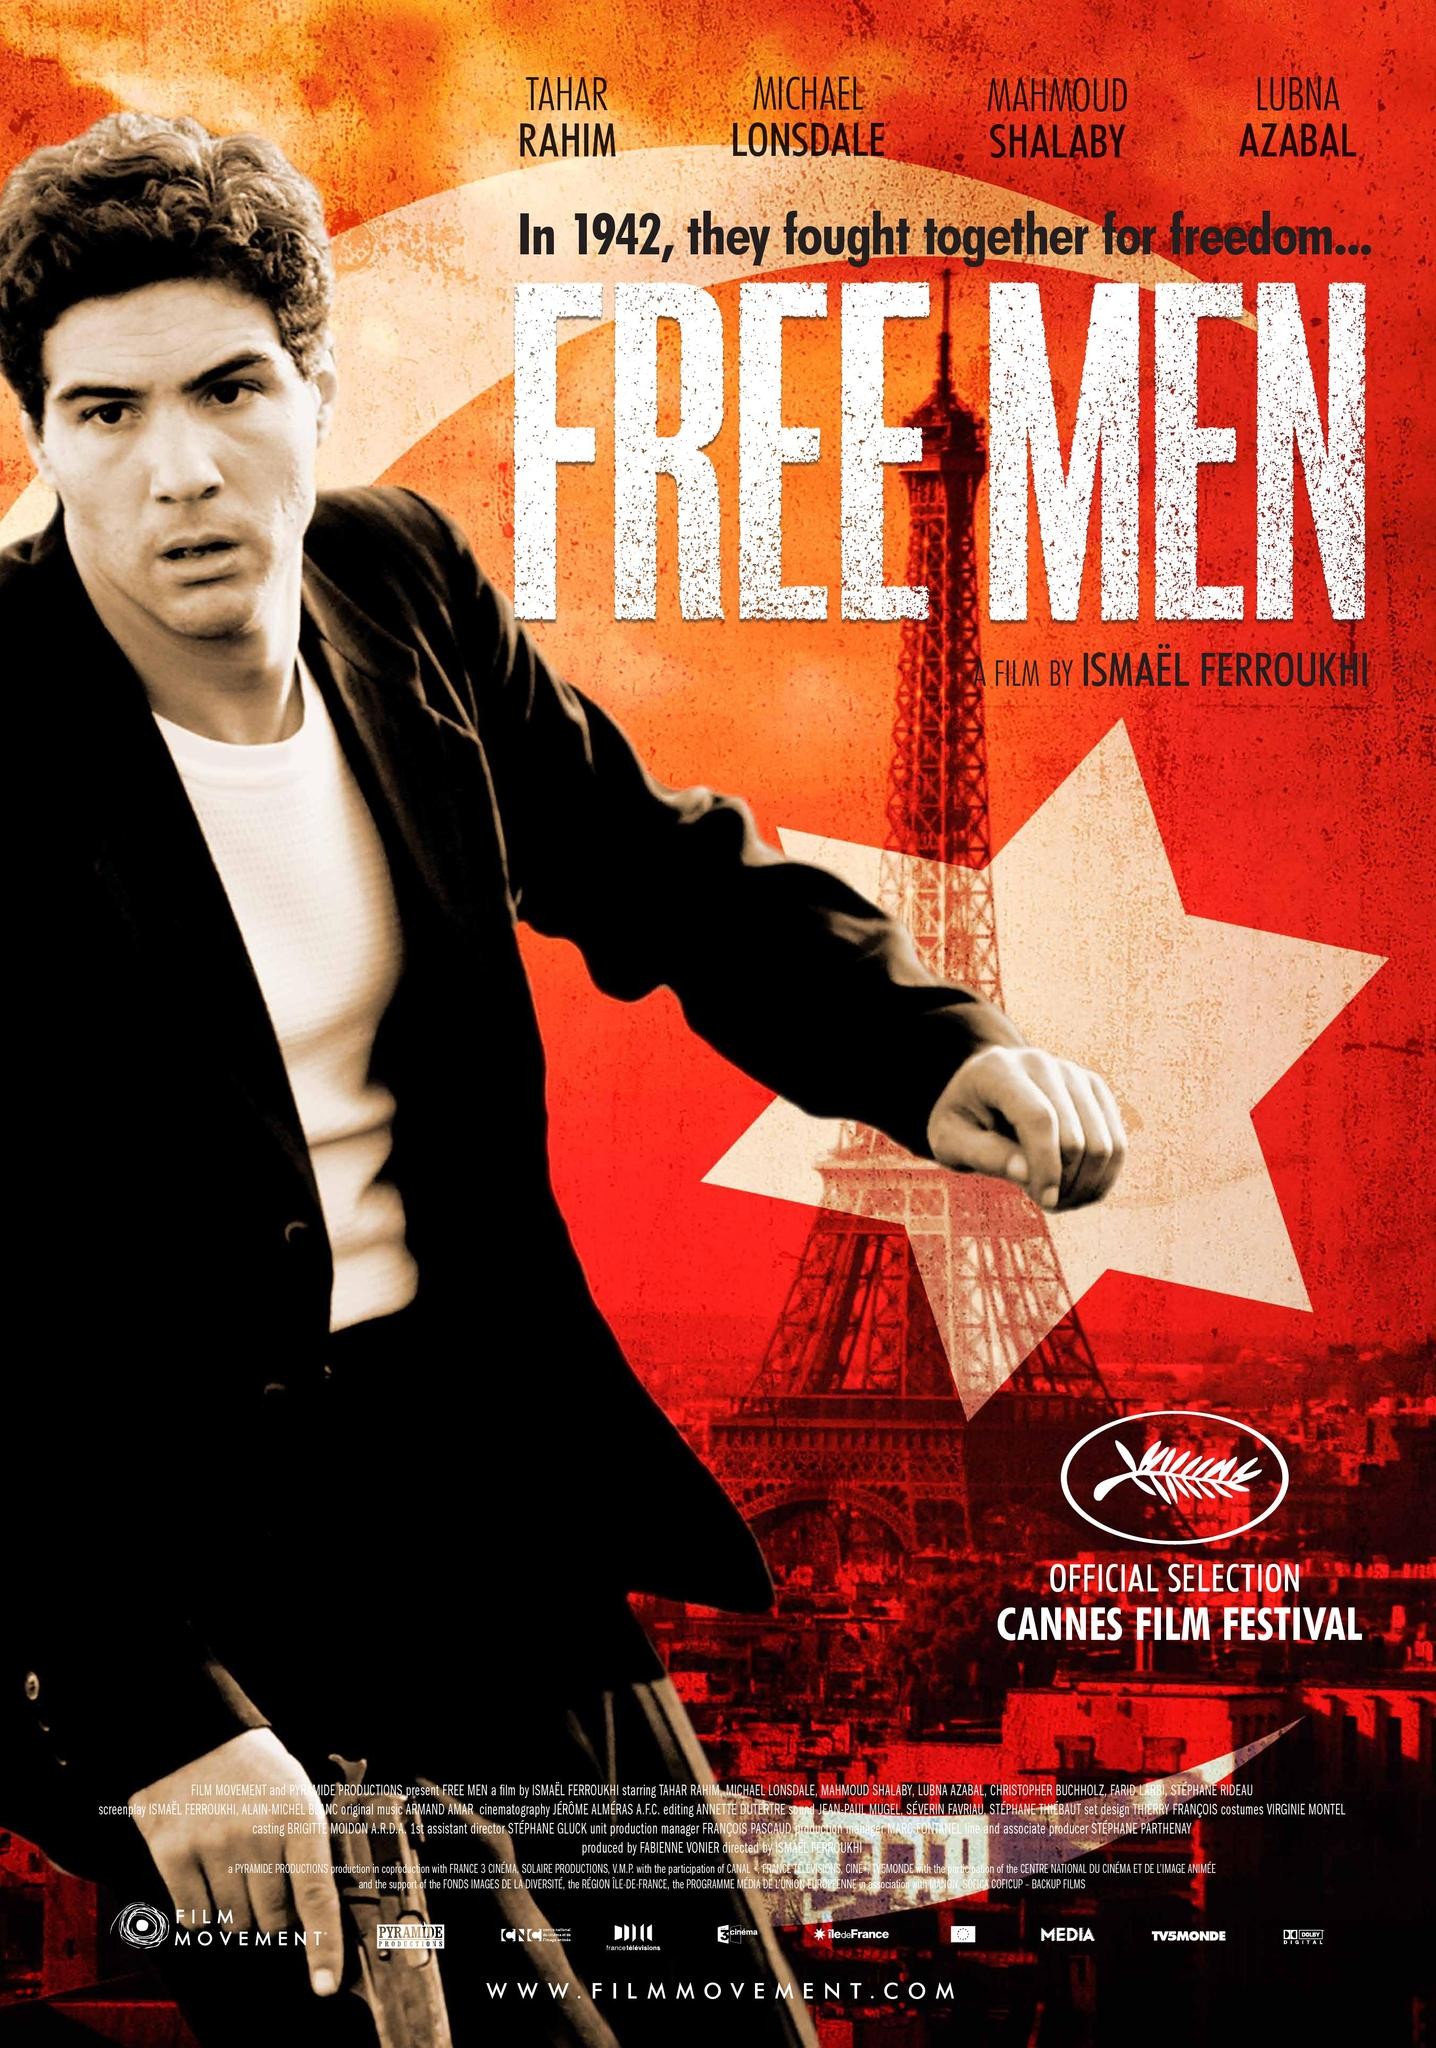 Mega Sized Movie Poster Image for Les hommes libres (#1 of 2)